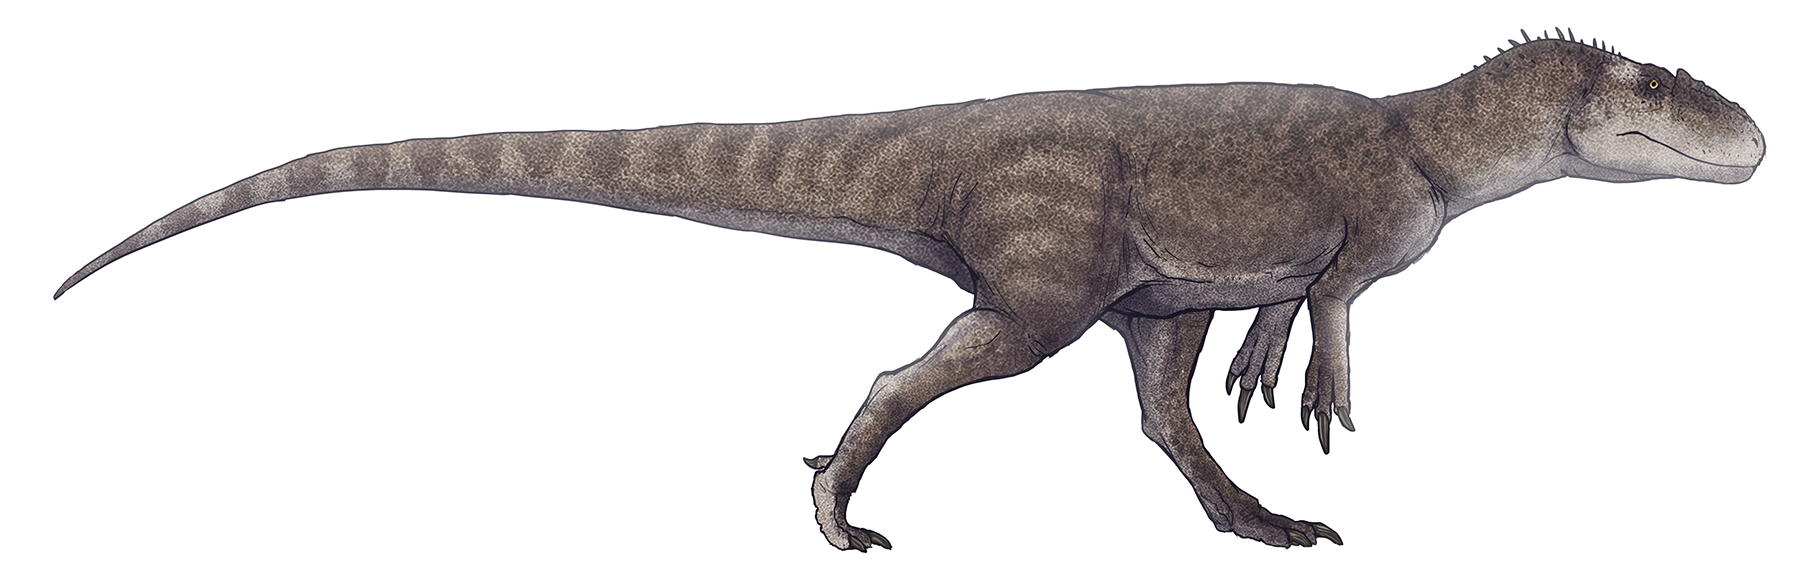 File:Gasosaurus constructus.png - Wikimedia Commons